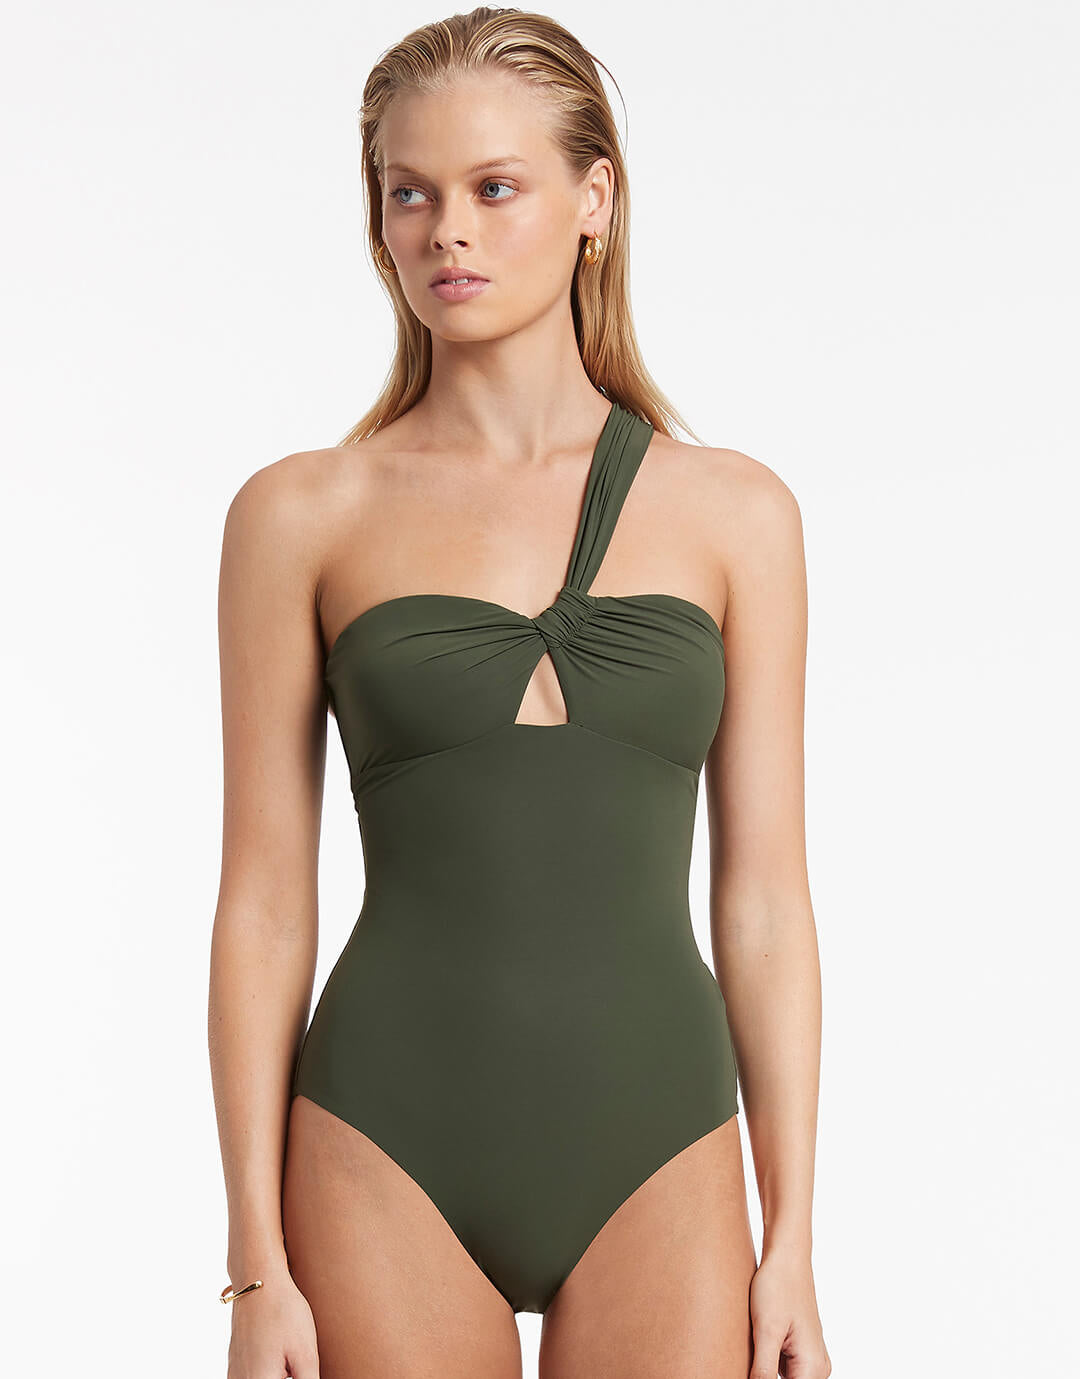 Jetset Gathered One Shoulder Swimsuit - Olive - Simply Beach UK